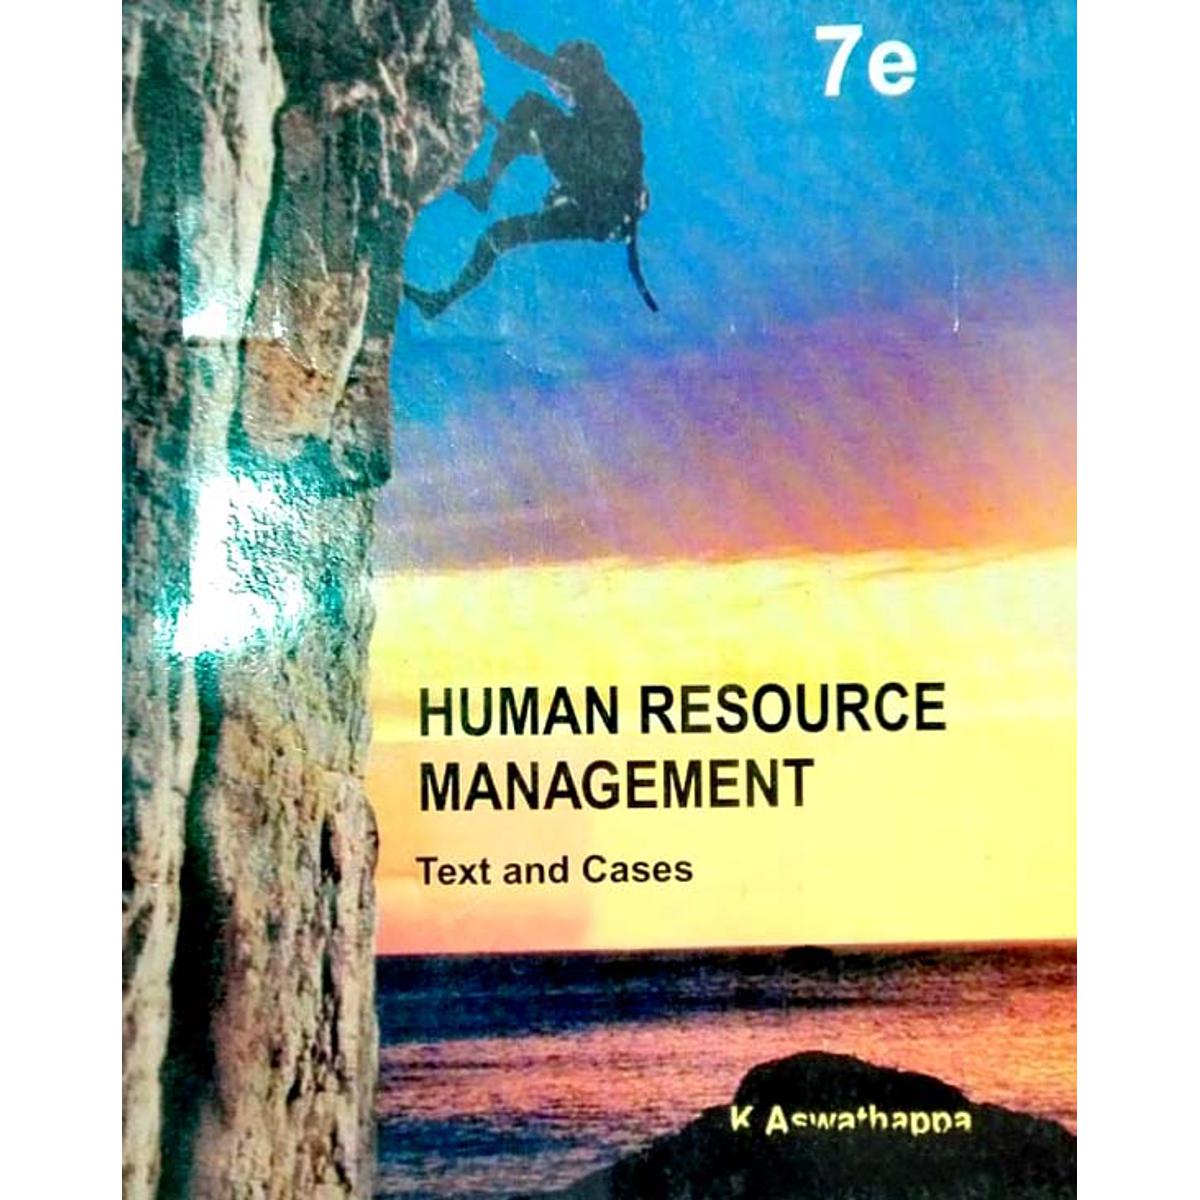 Human Resource Management 7th Edition (K.Aswathappa)